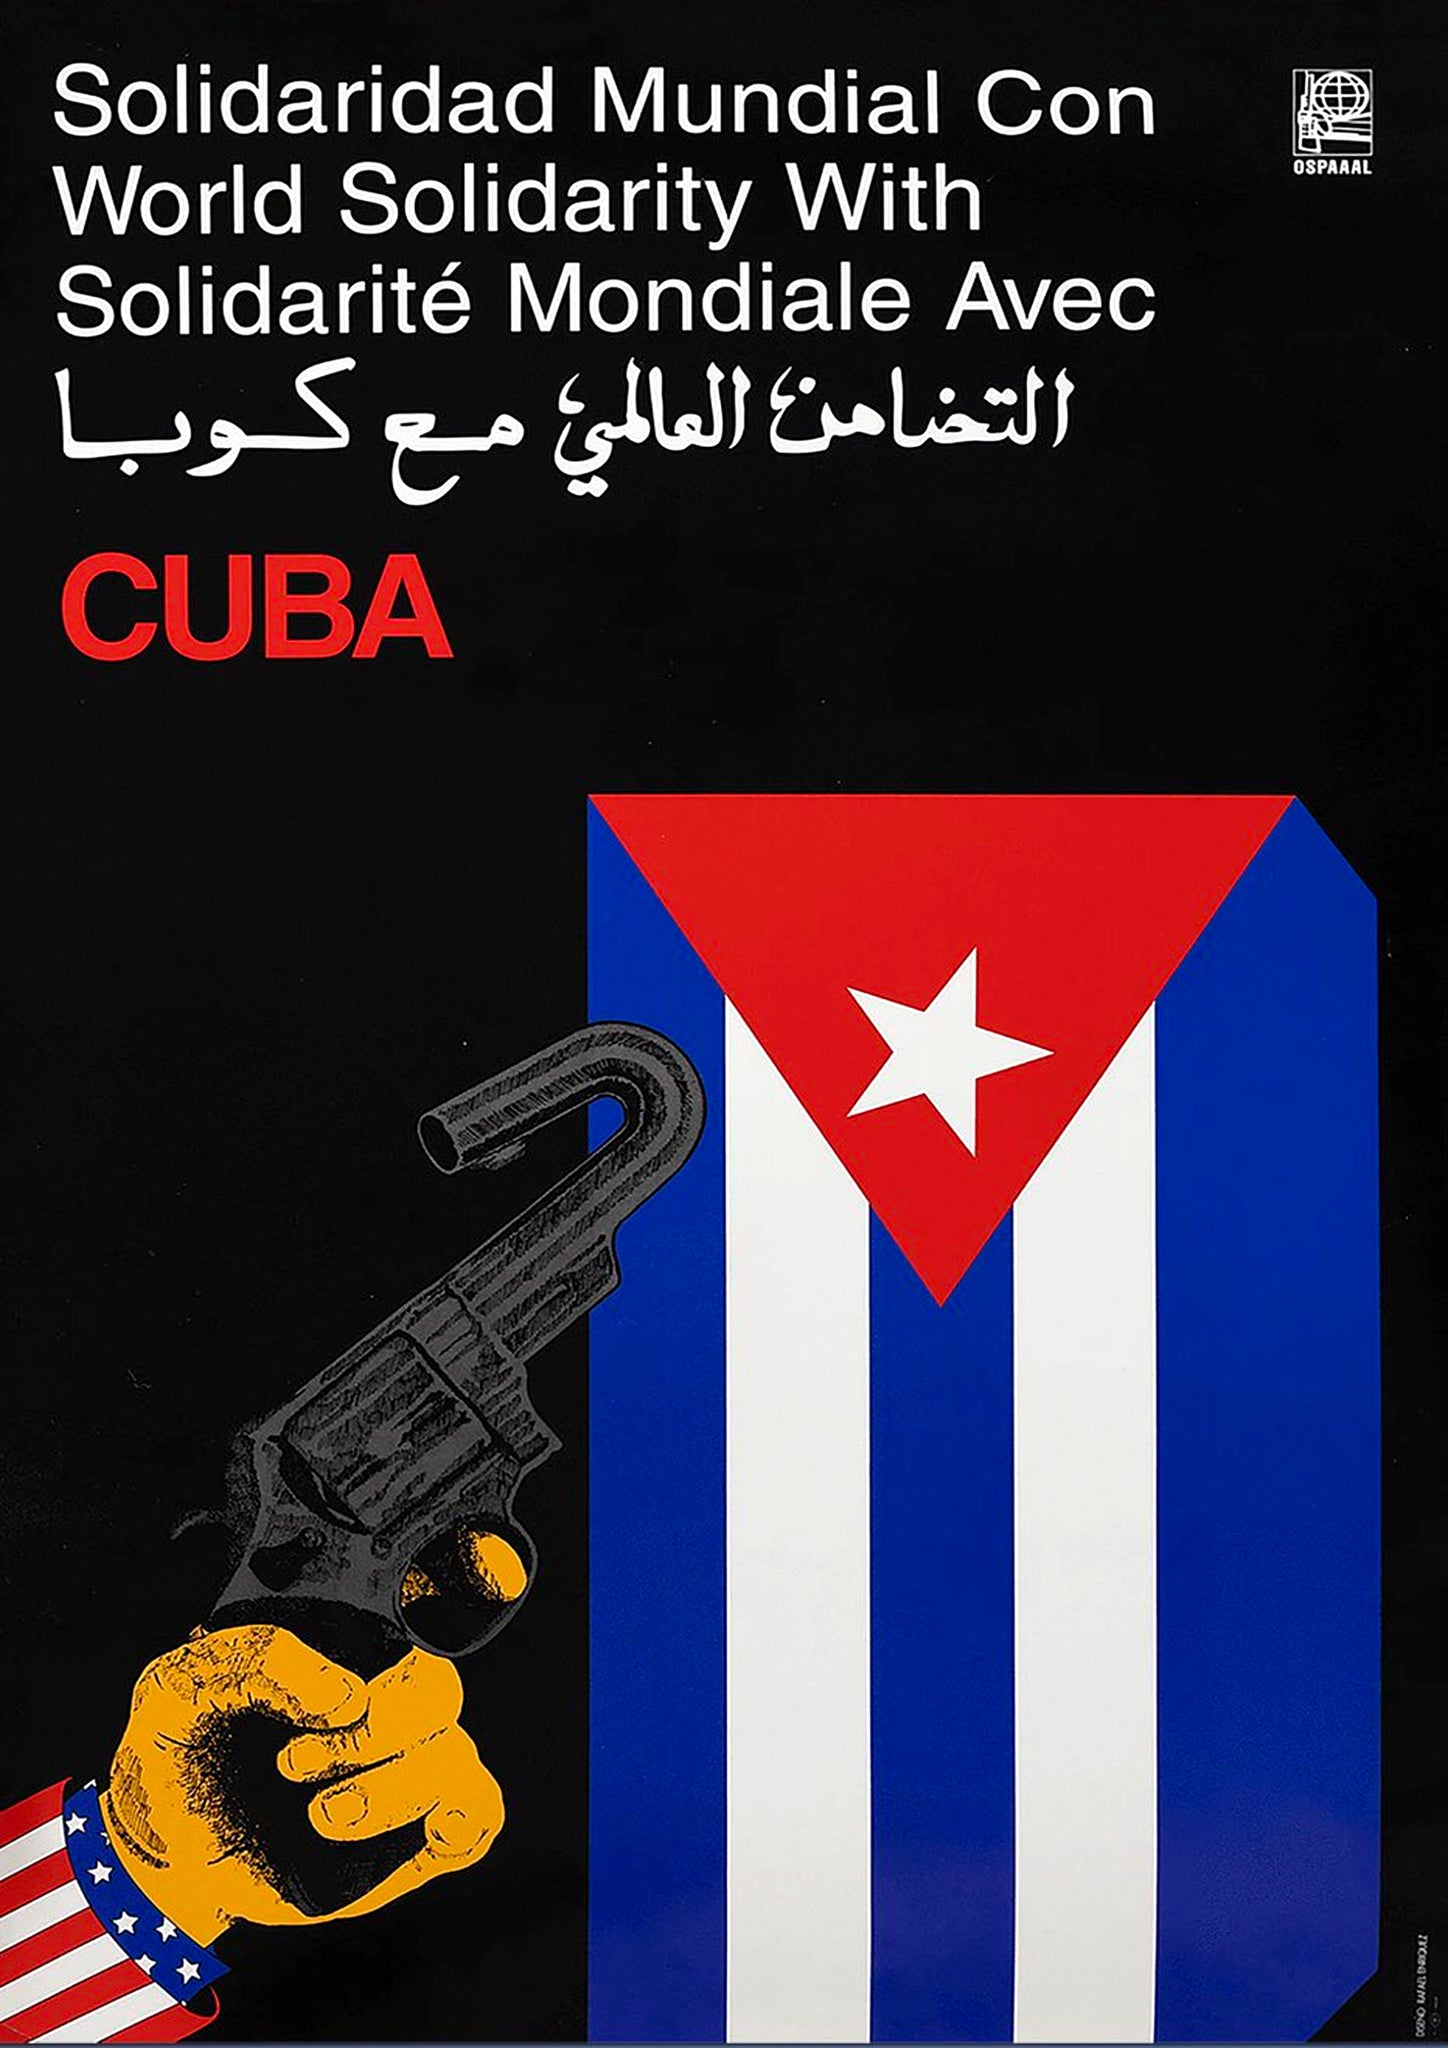 World solidarity with Cuba — Cuban poster